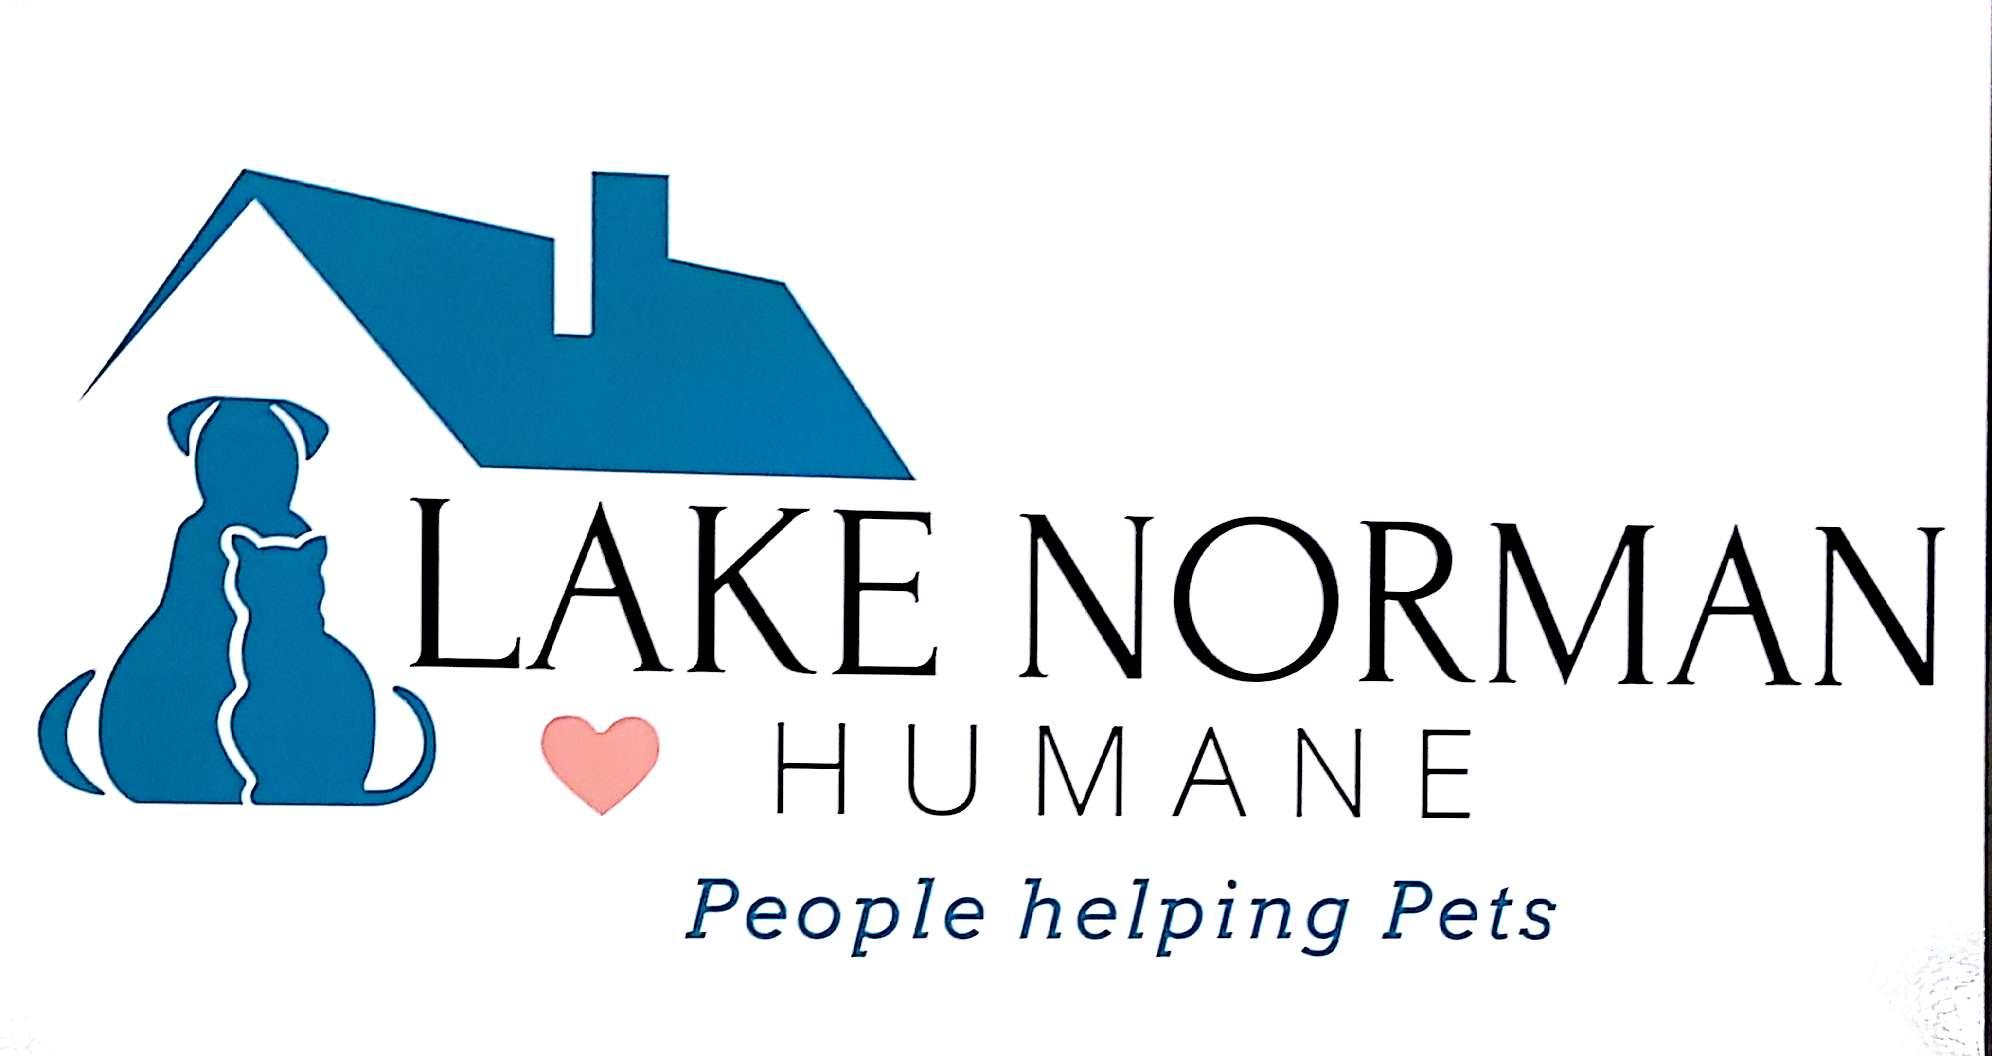 Lake norman humane drupal web developer adventist health system